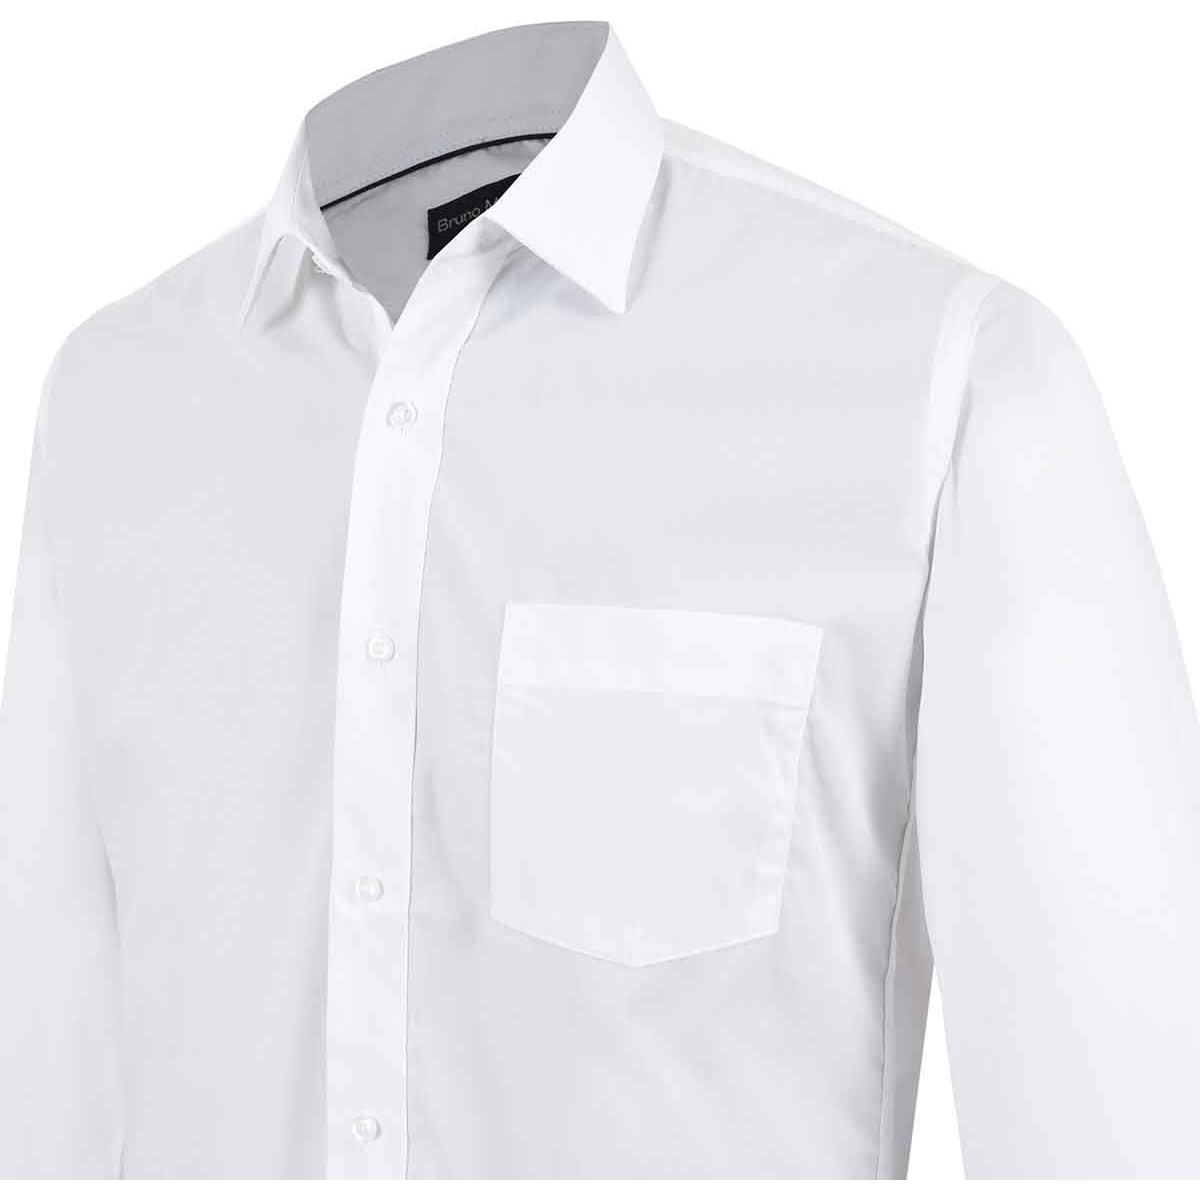 Camisa de Vestir Slim Fit Bruno Magnani Color Blanco para Hombre Modelo Elo Bm85000Bl